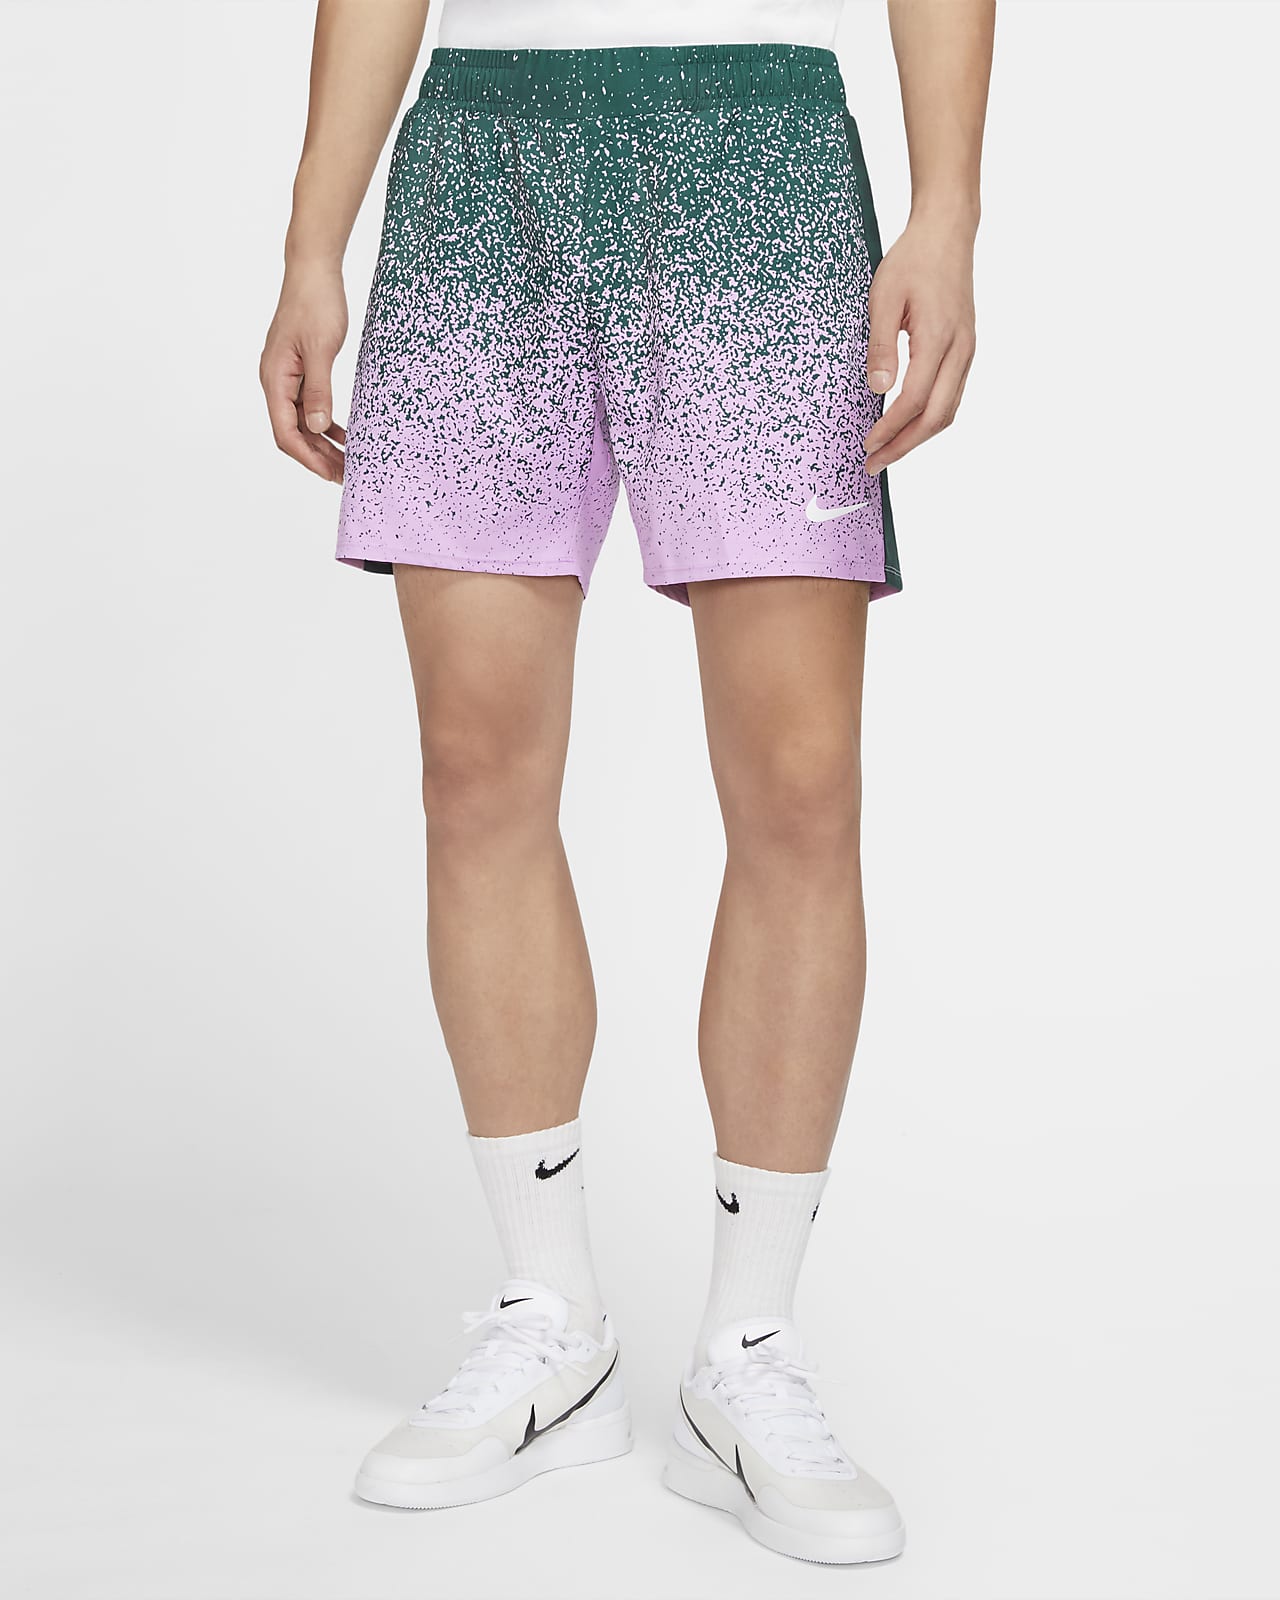 18cm approx. Tennis Shorts. Nike SG